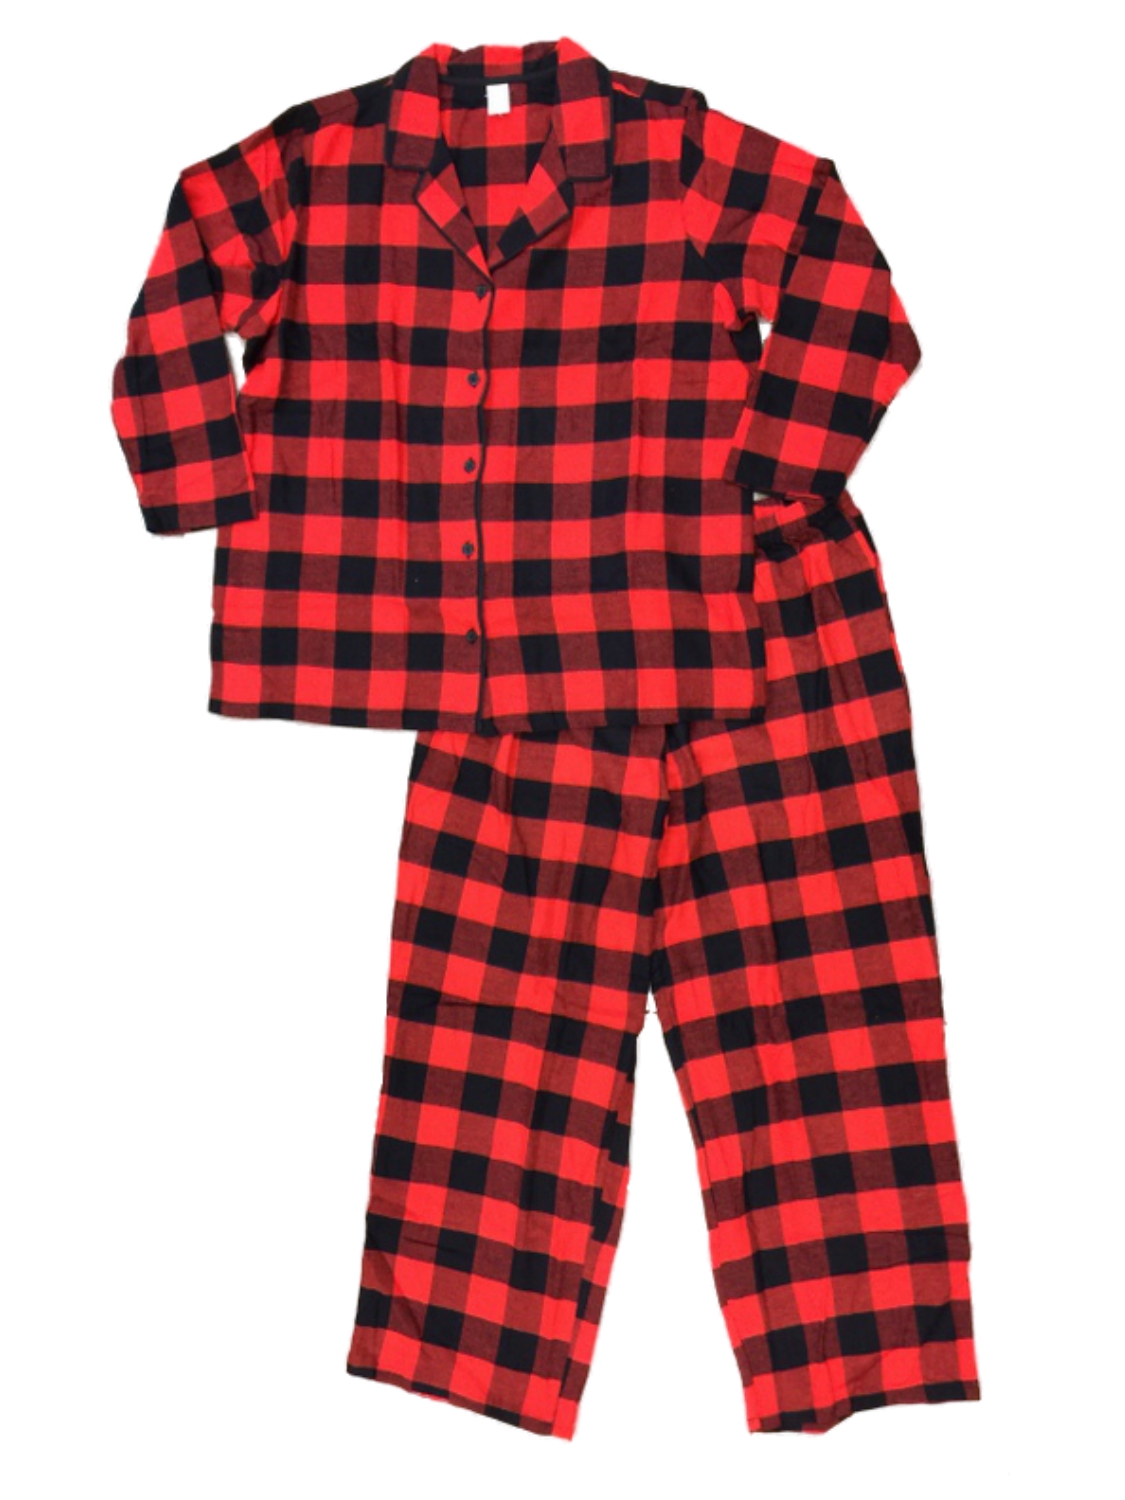 Sleep Chic Womens Red & Black Buffalo Plaid Flannel Pajamas Sleep Set